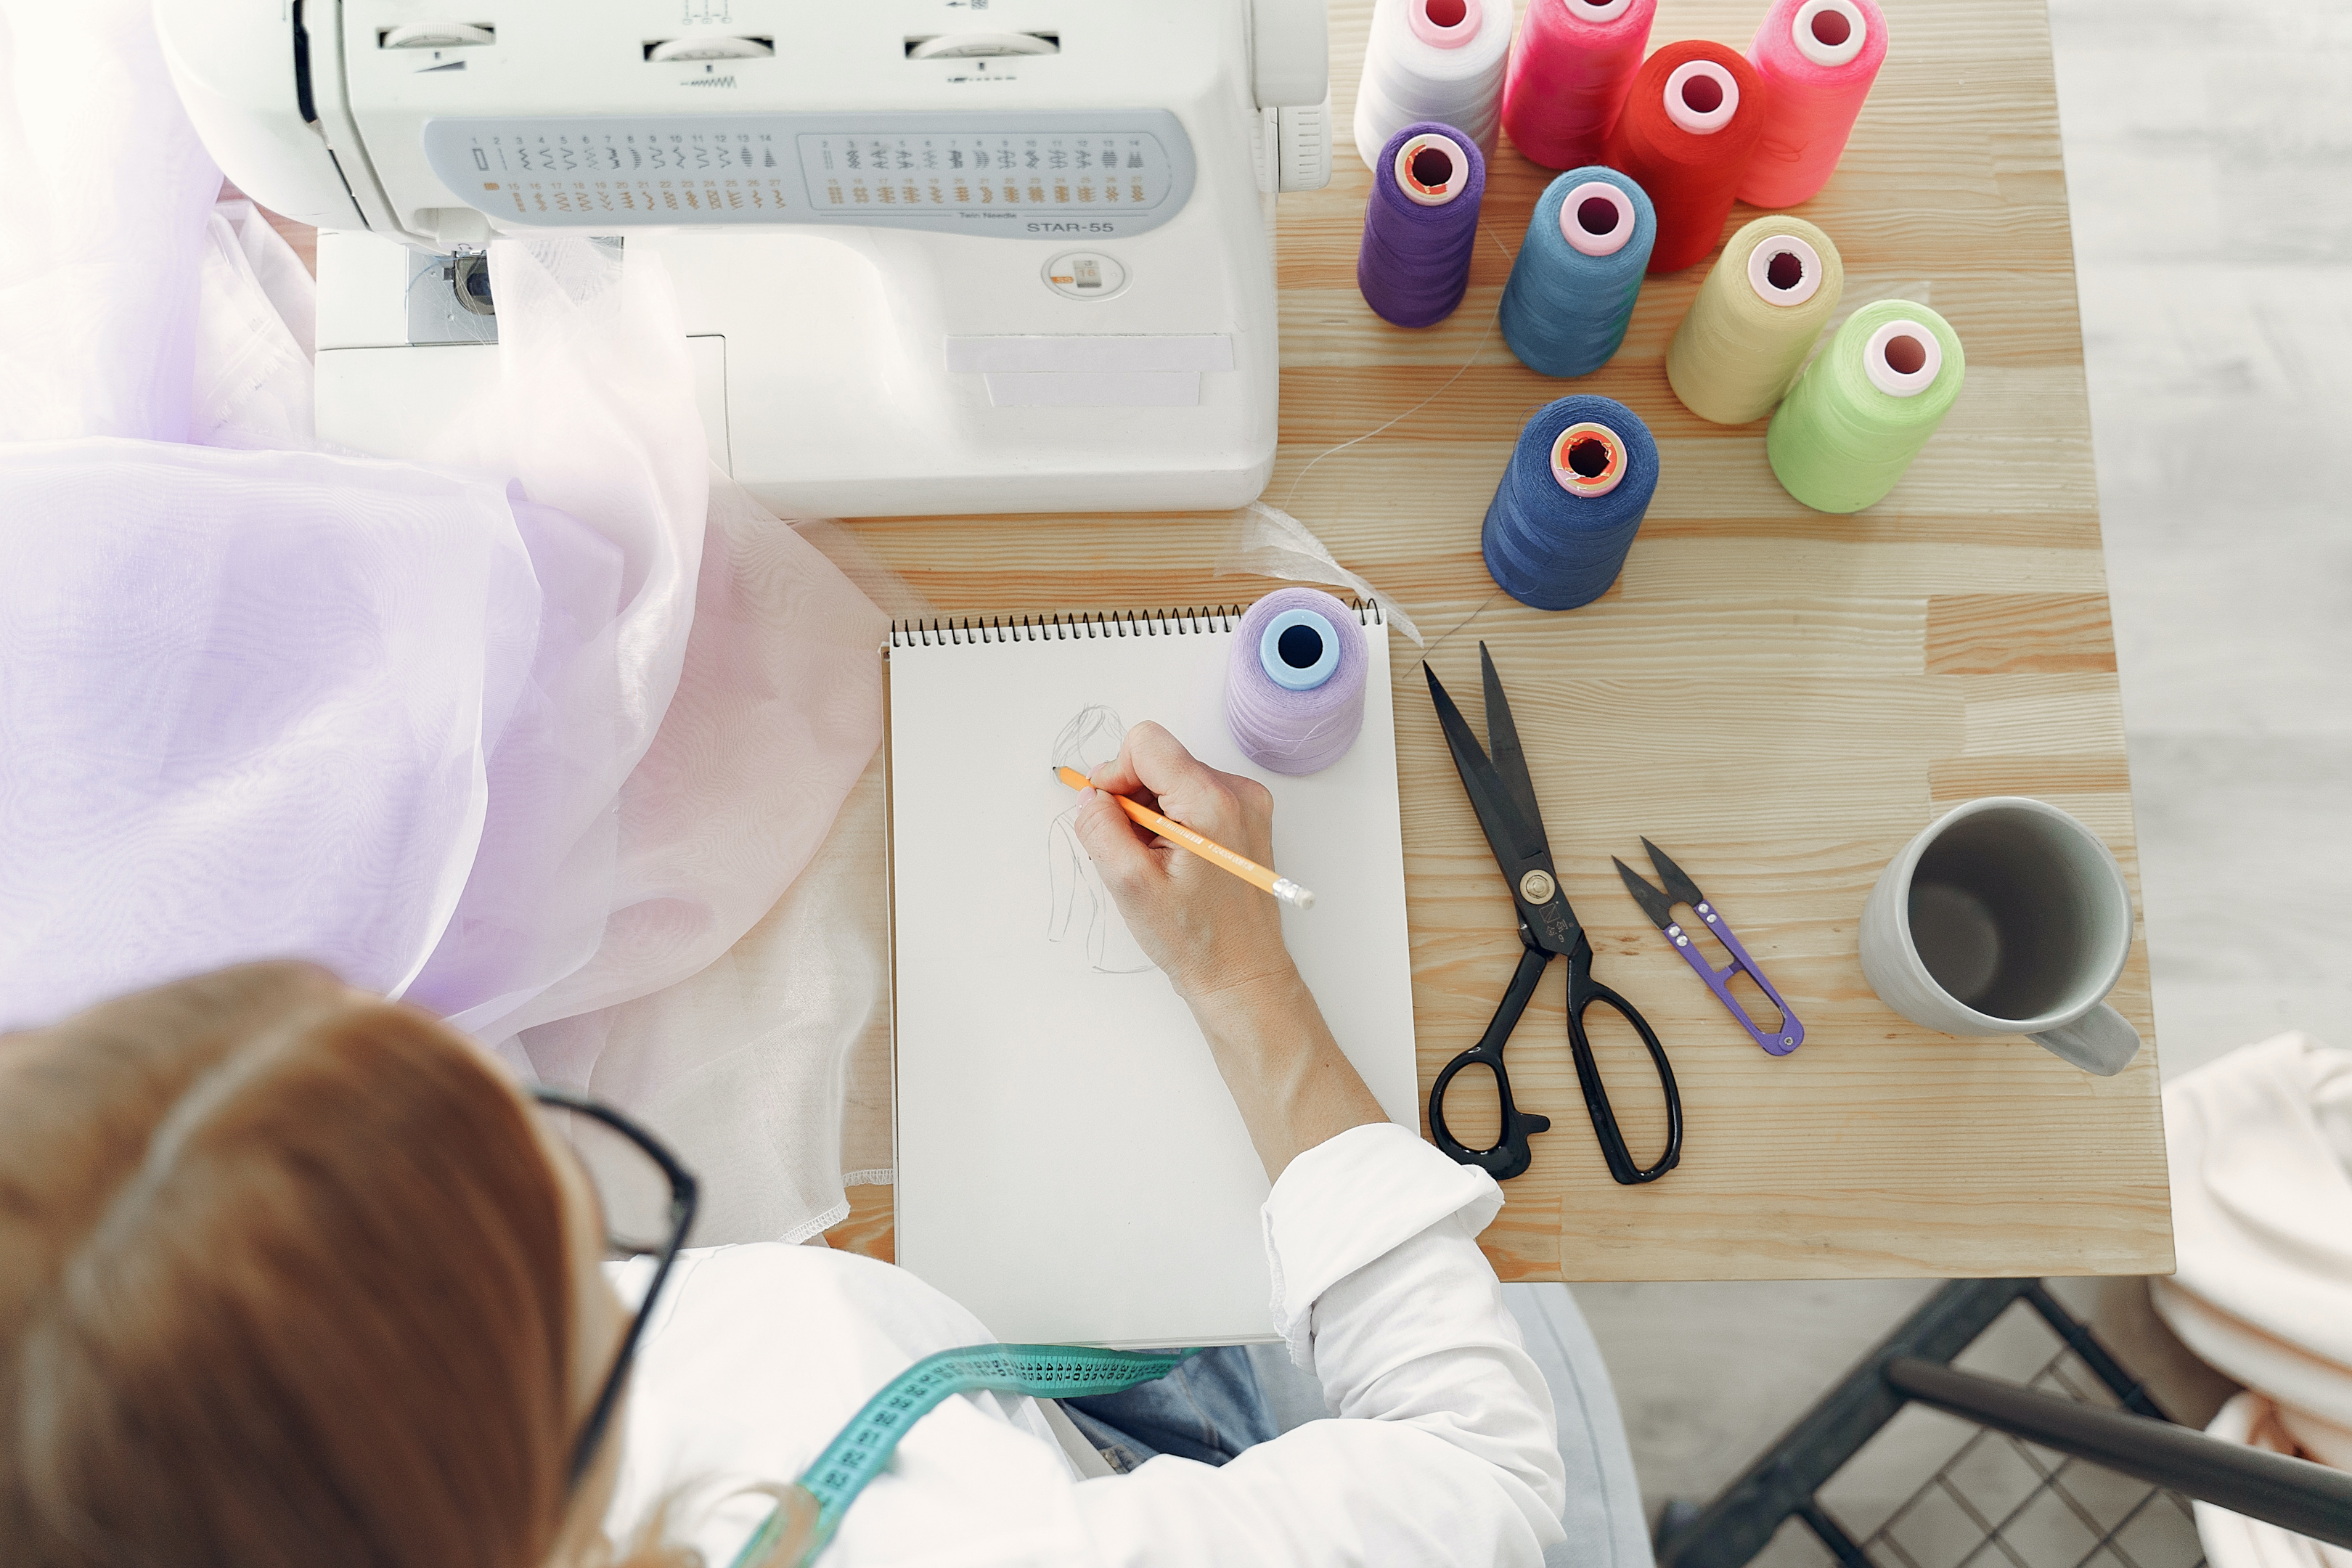 Designer sketching next to a sewing machine.